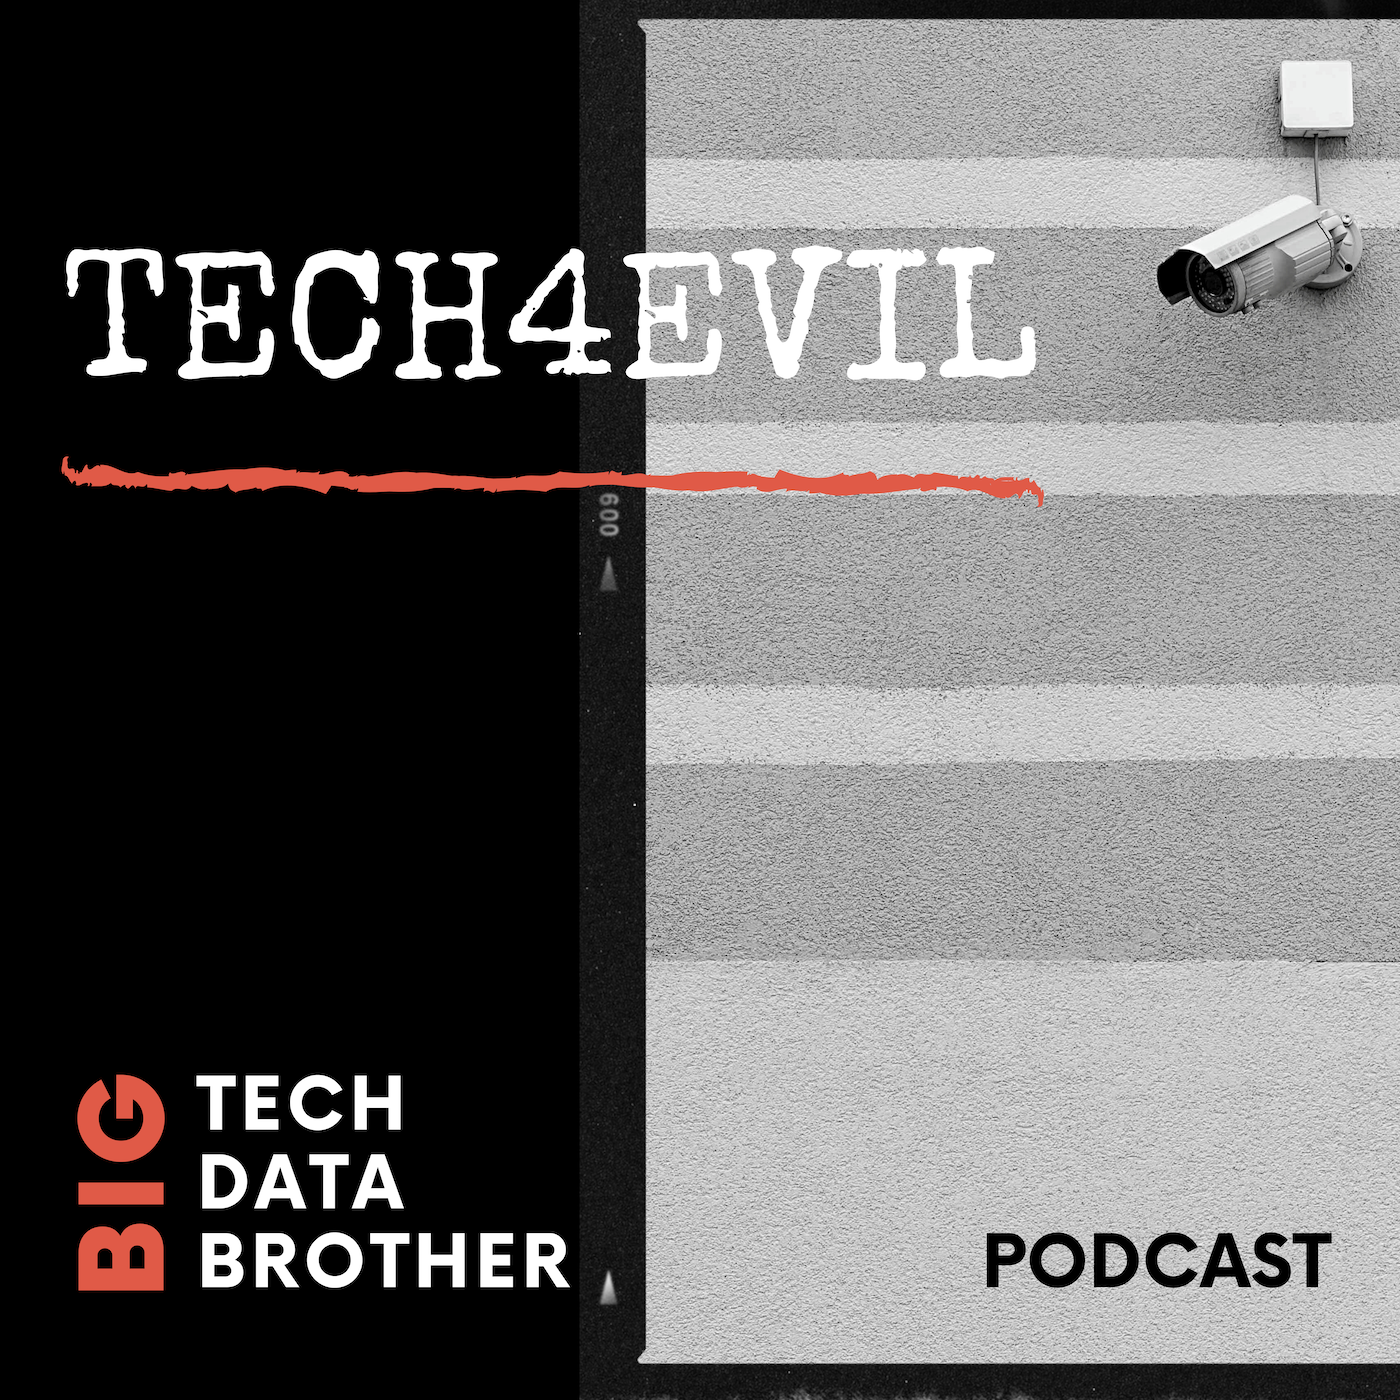 Don’t Click Here - Tech4Evil Season 3 Teaser